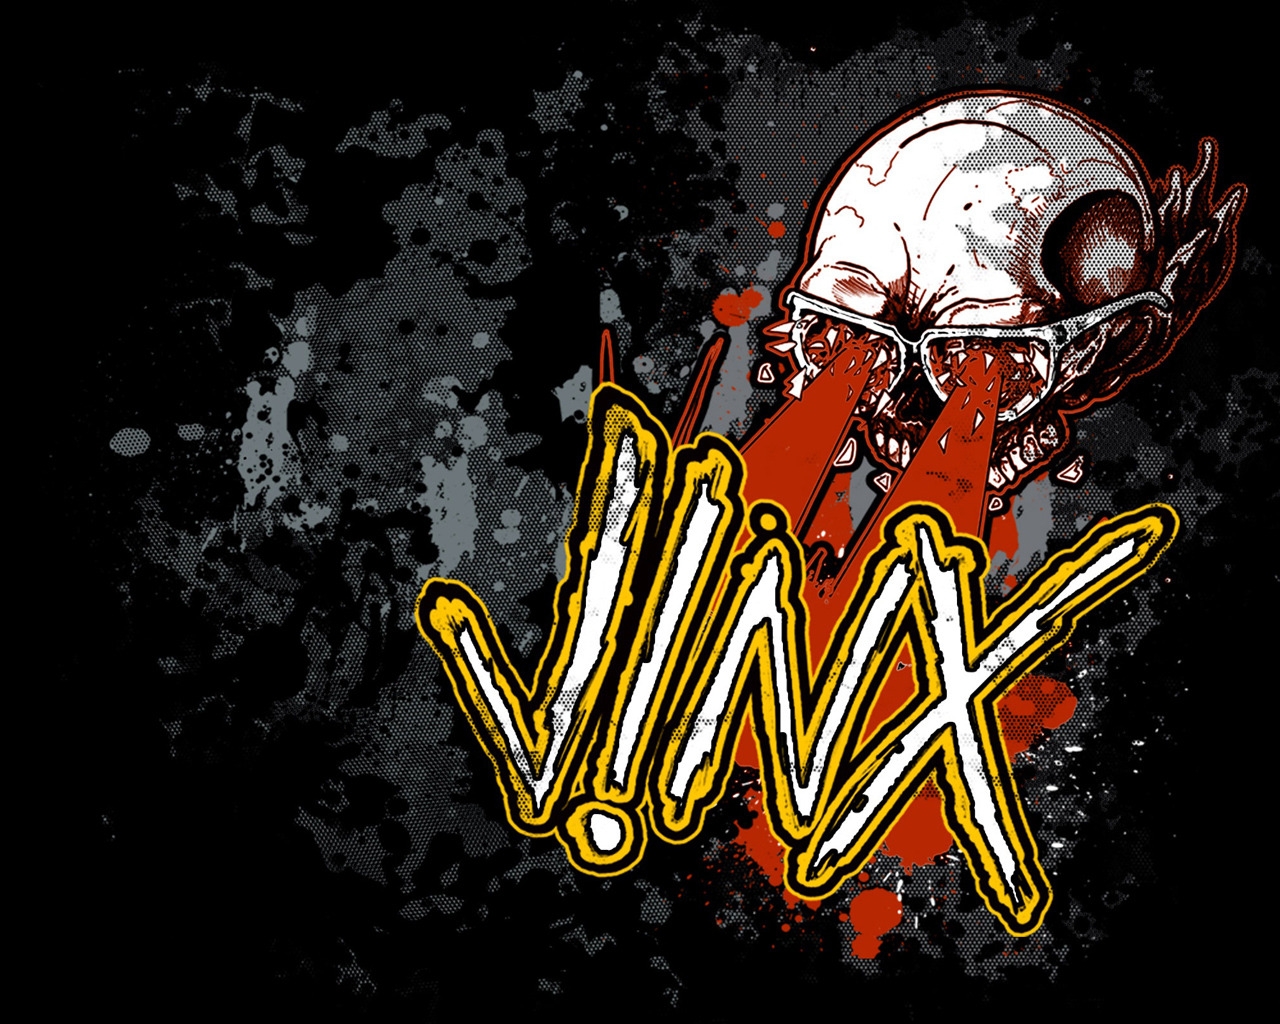 Skull Vinx for 1280 x 1024 resolution